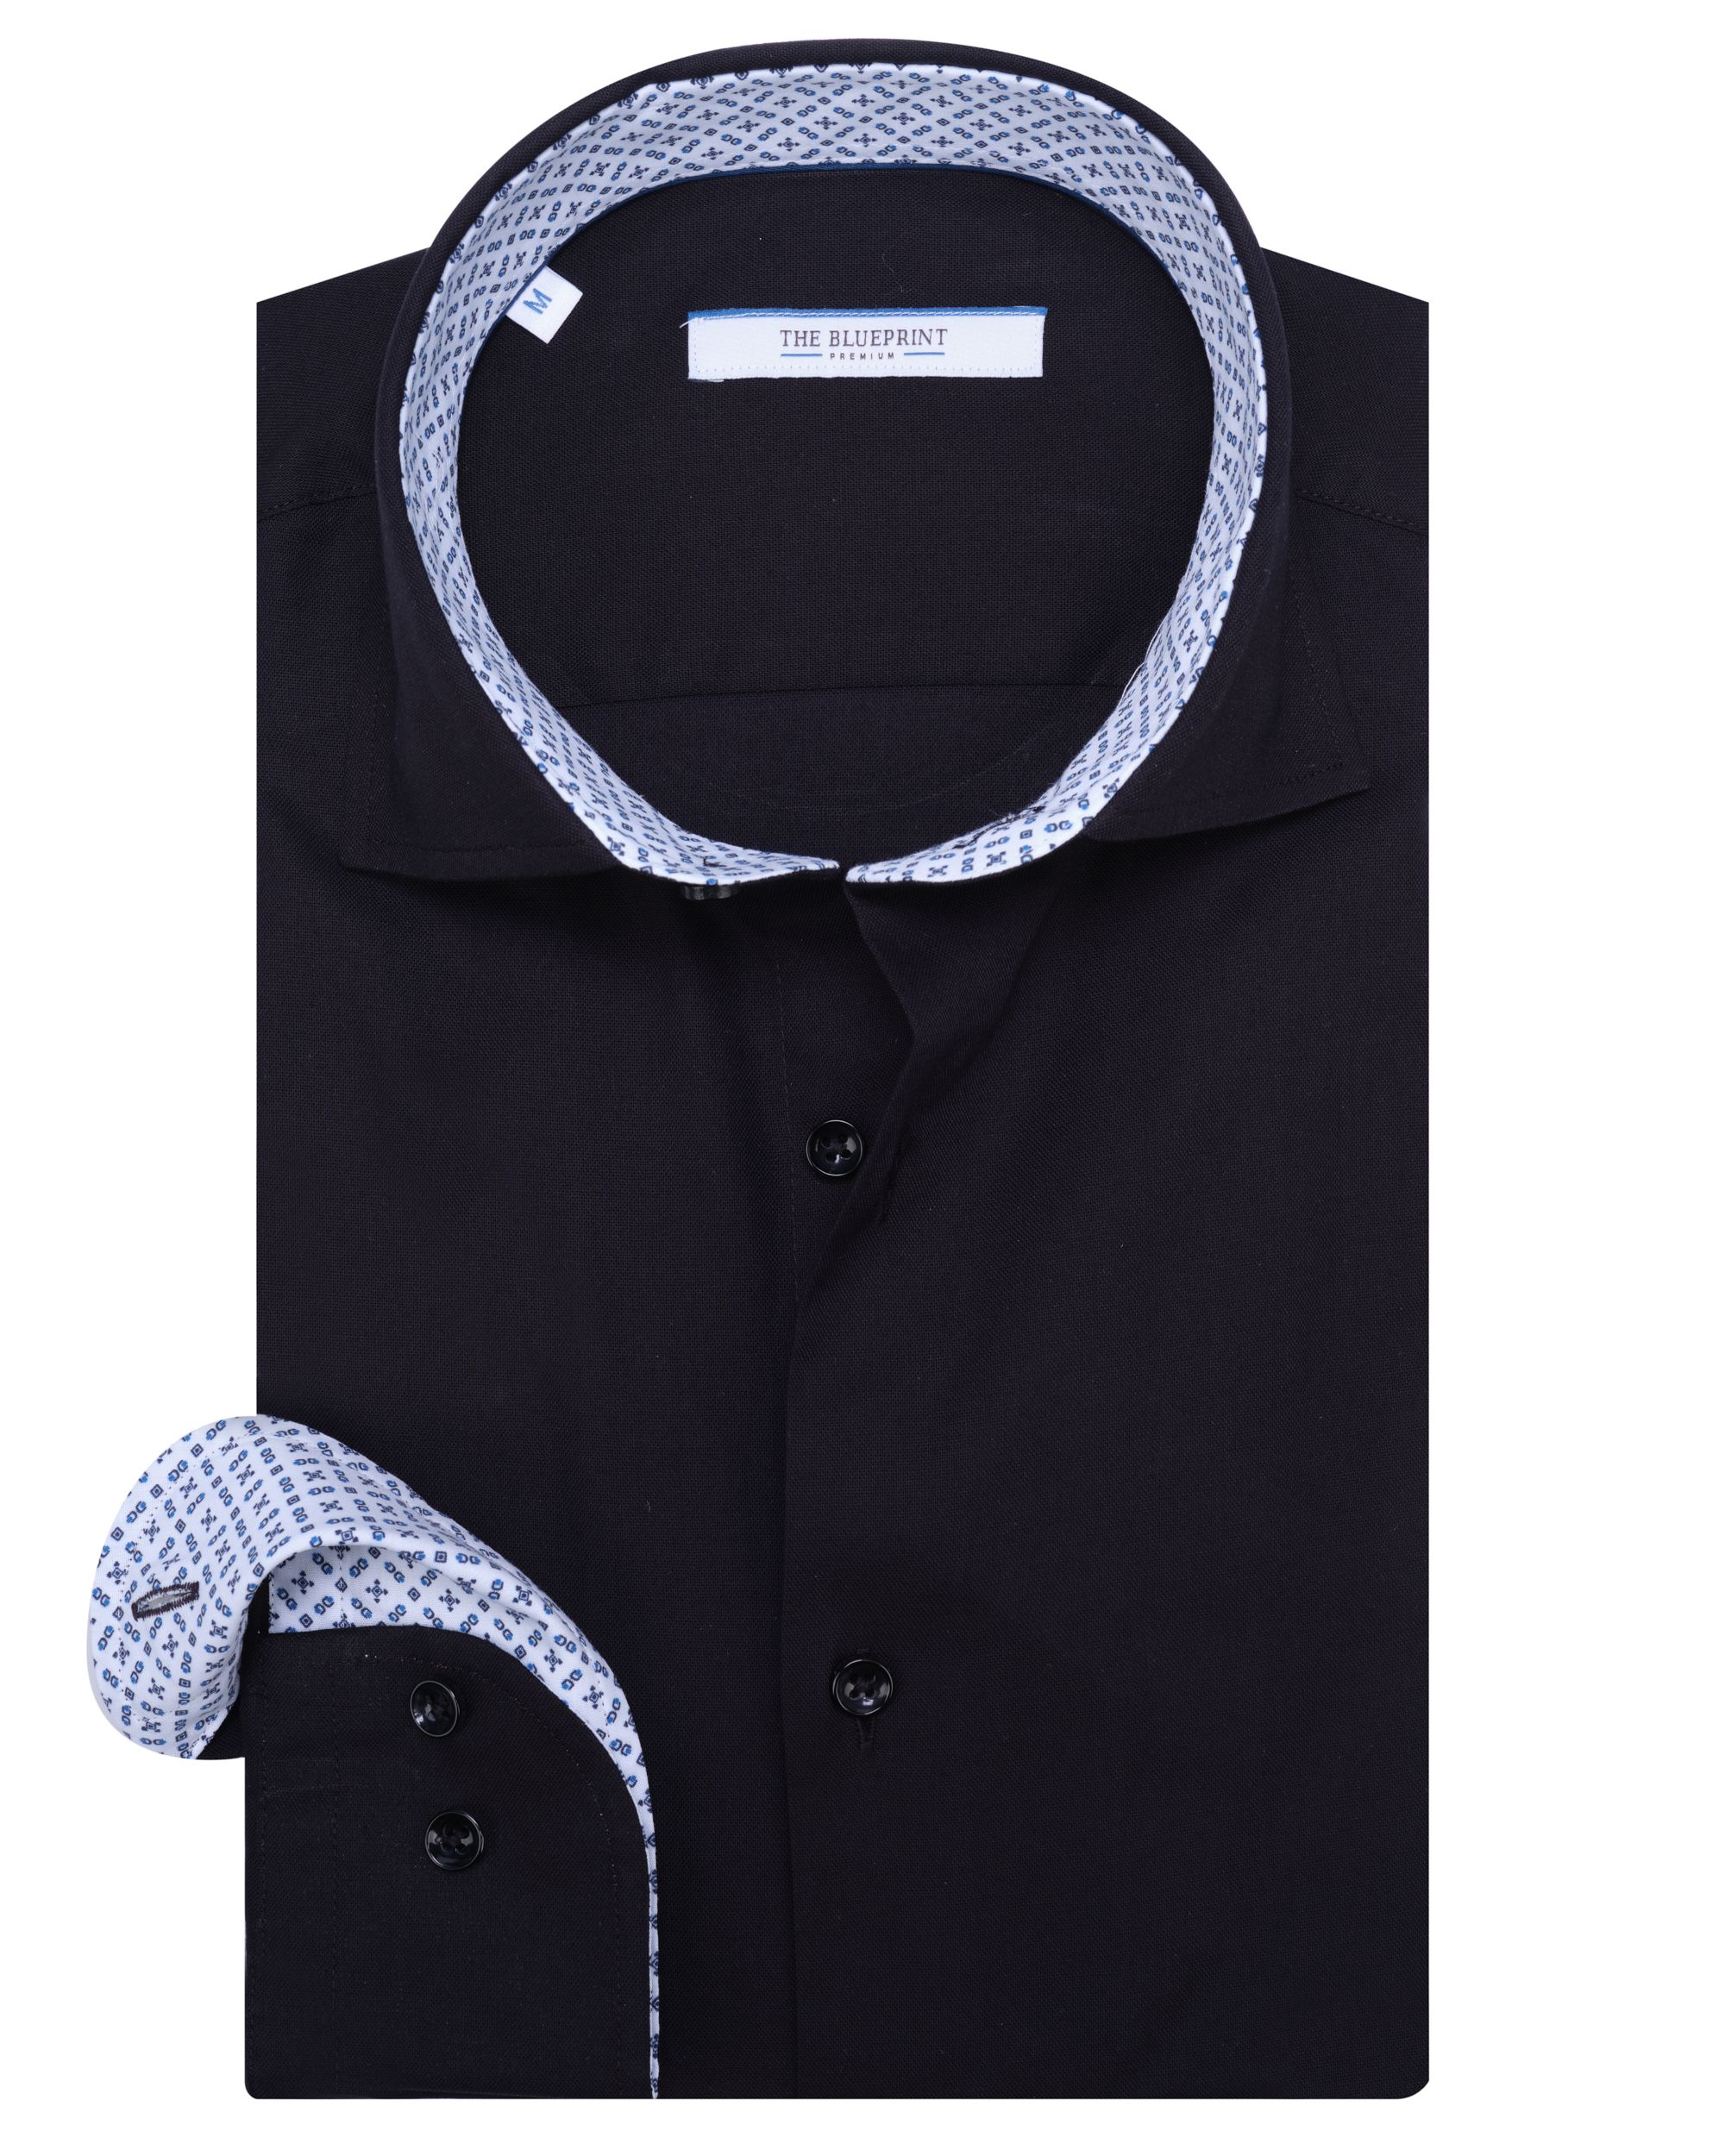 The BLUEPRINT Premium Casual Overhemd LM Black 082233-001-L